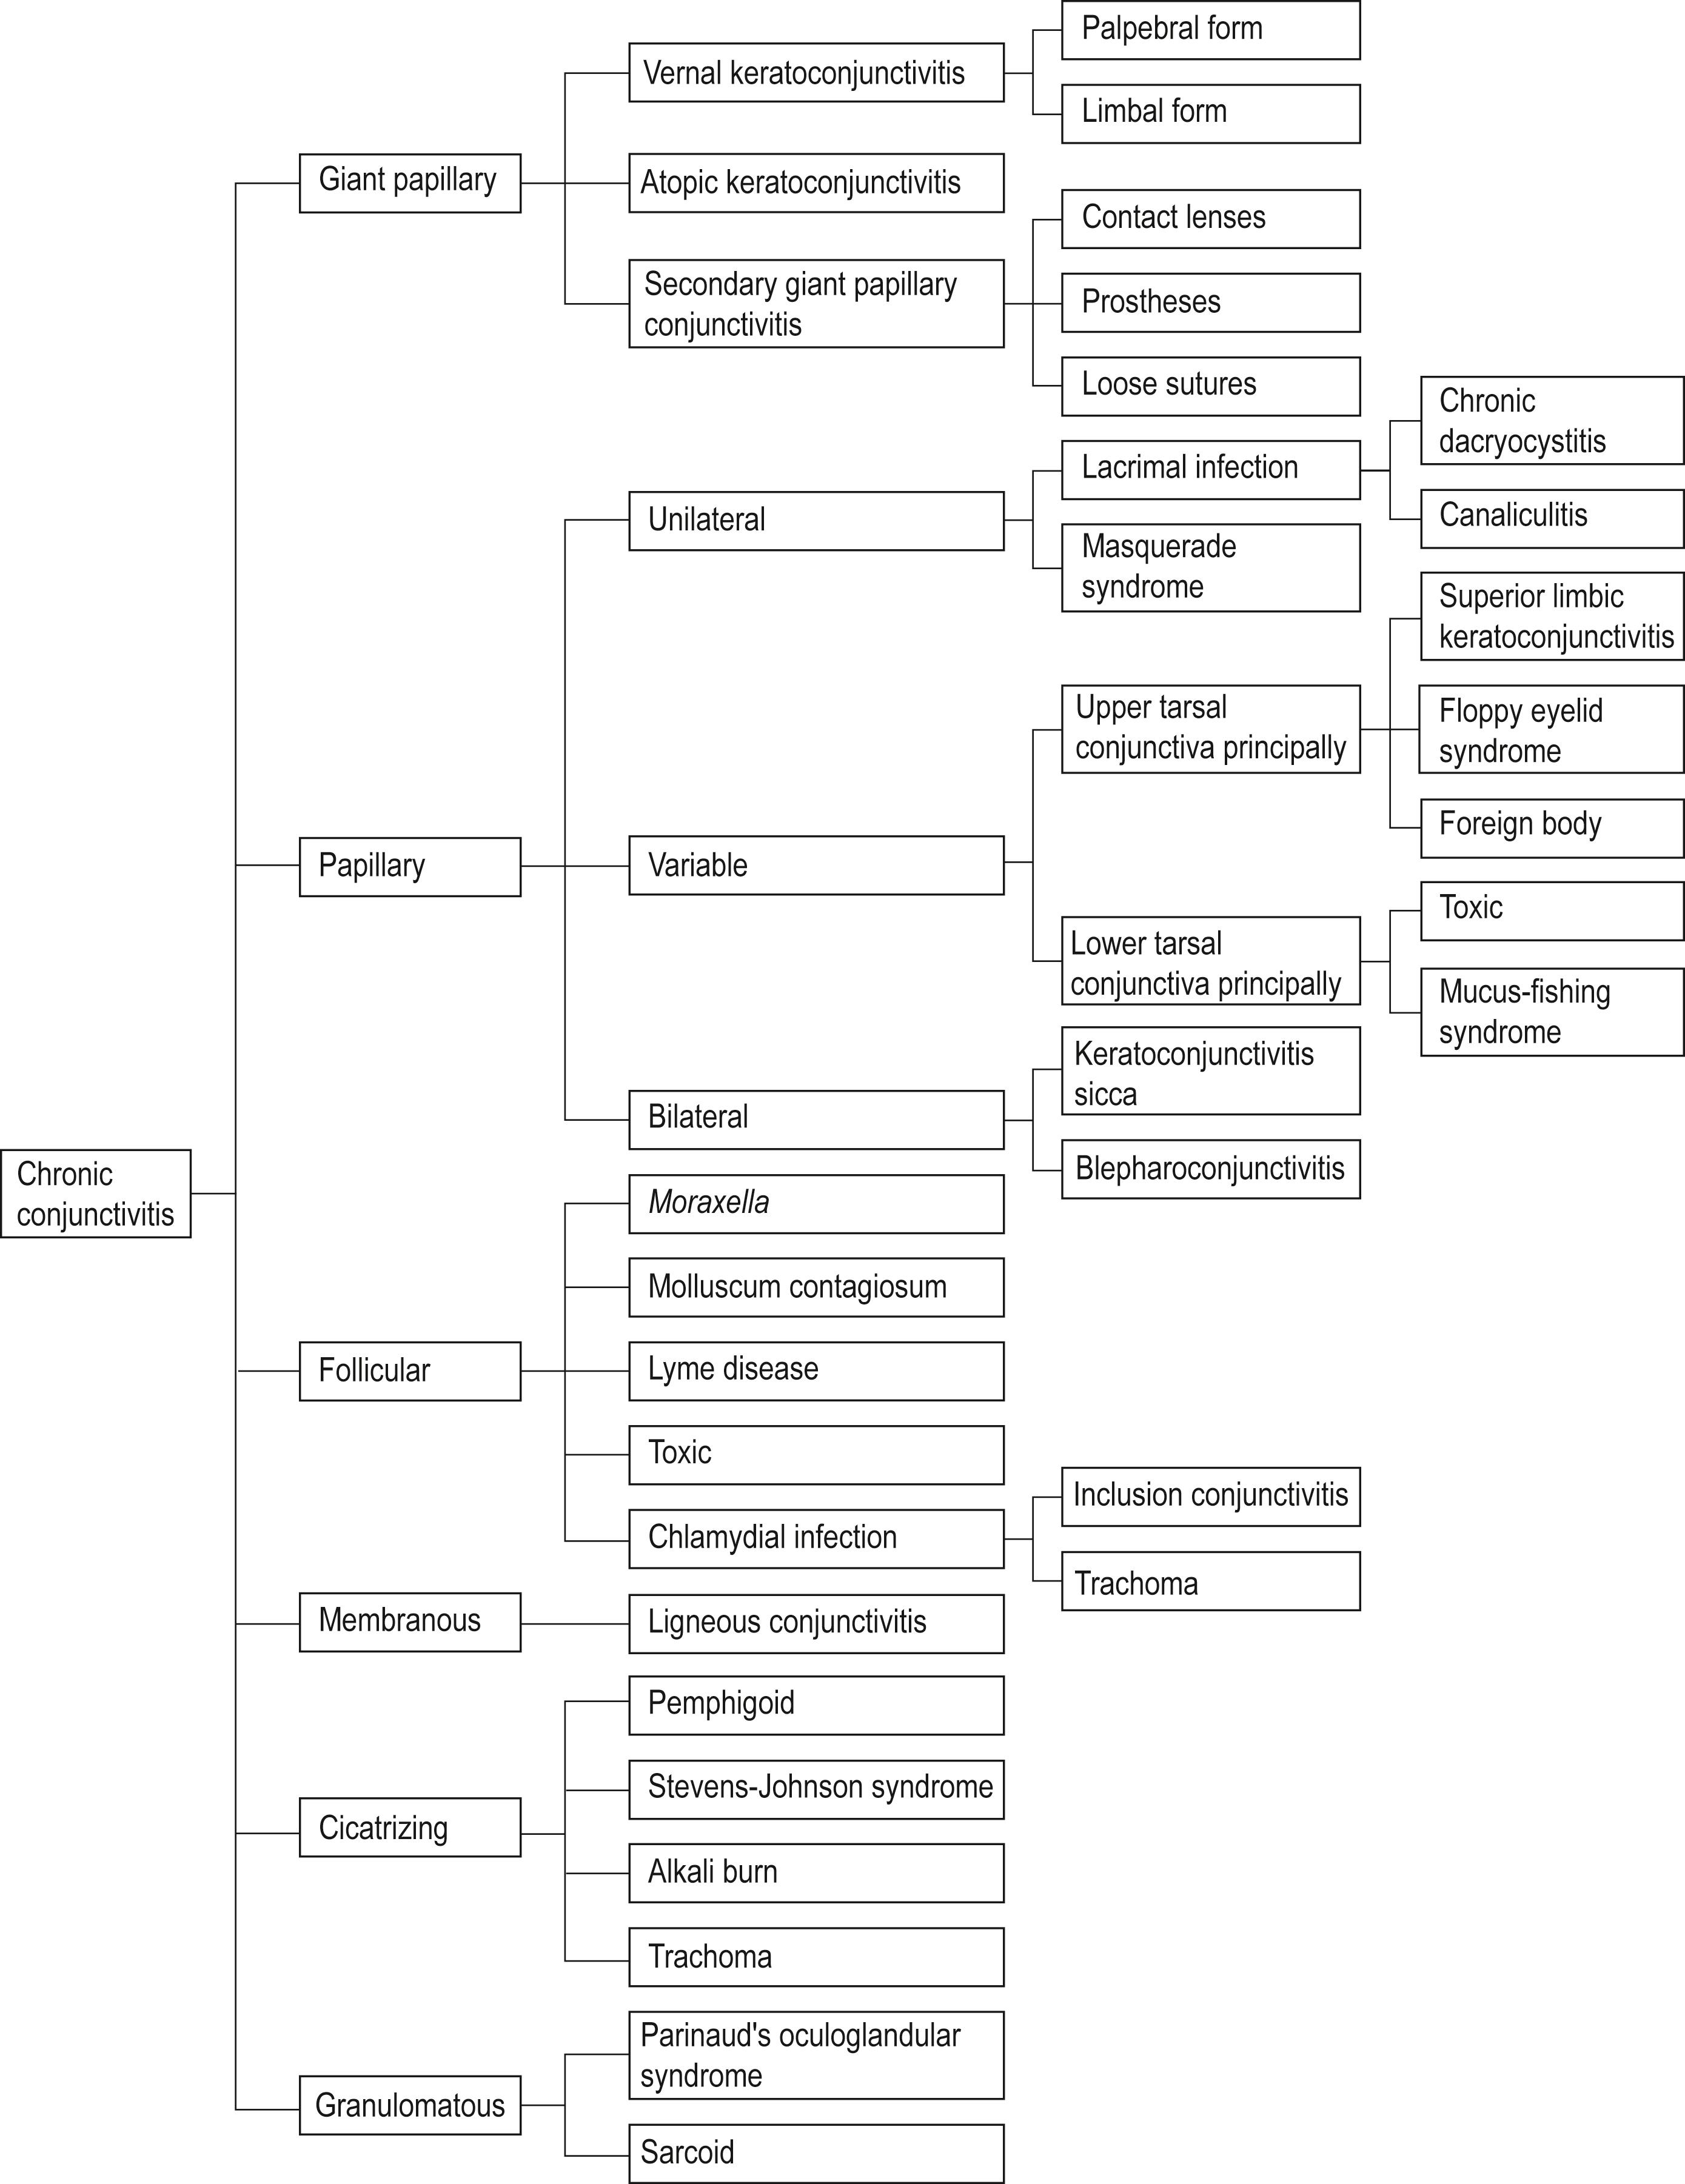 Fig. 36.2, An algorithm for diagnosing chronic conjunctivitis.